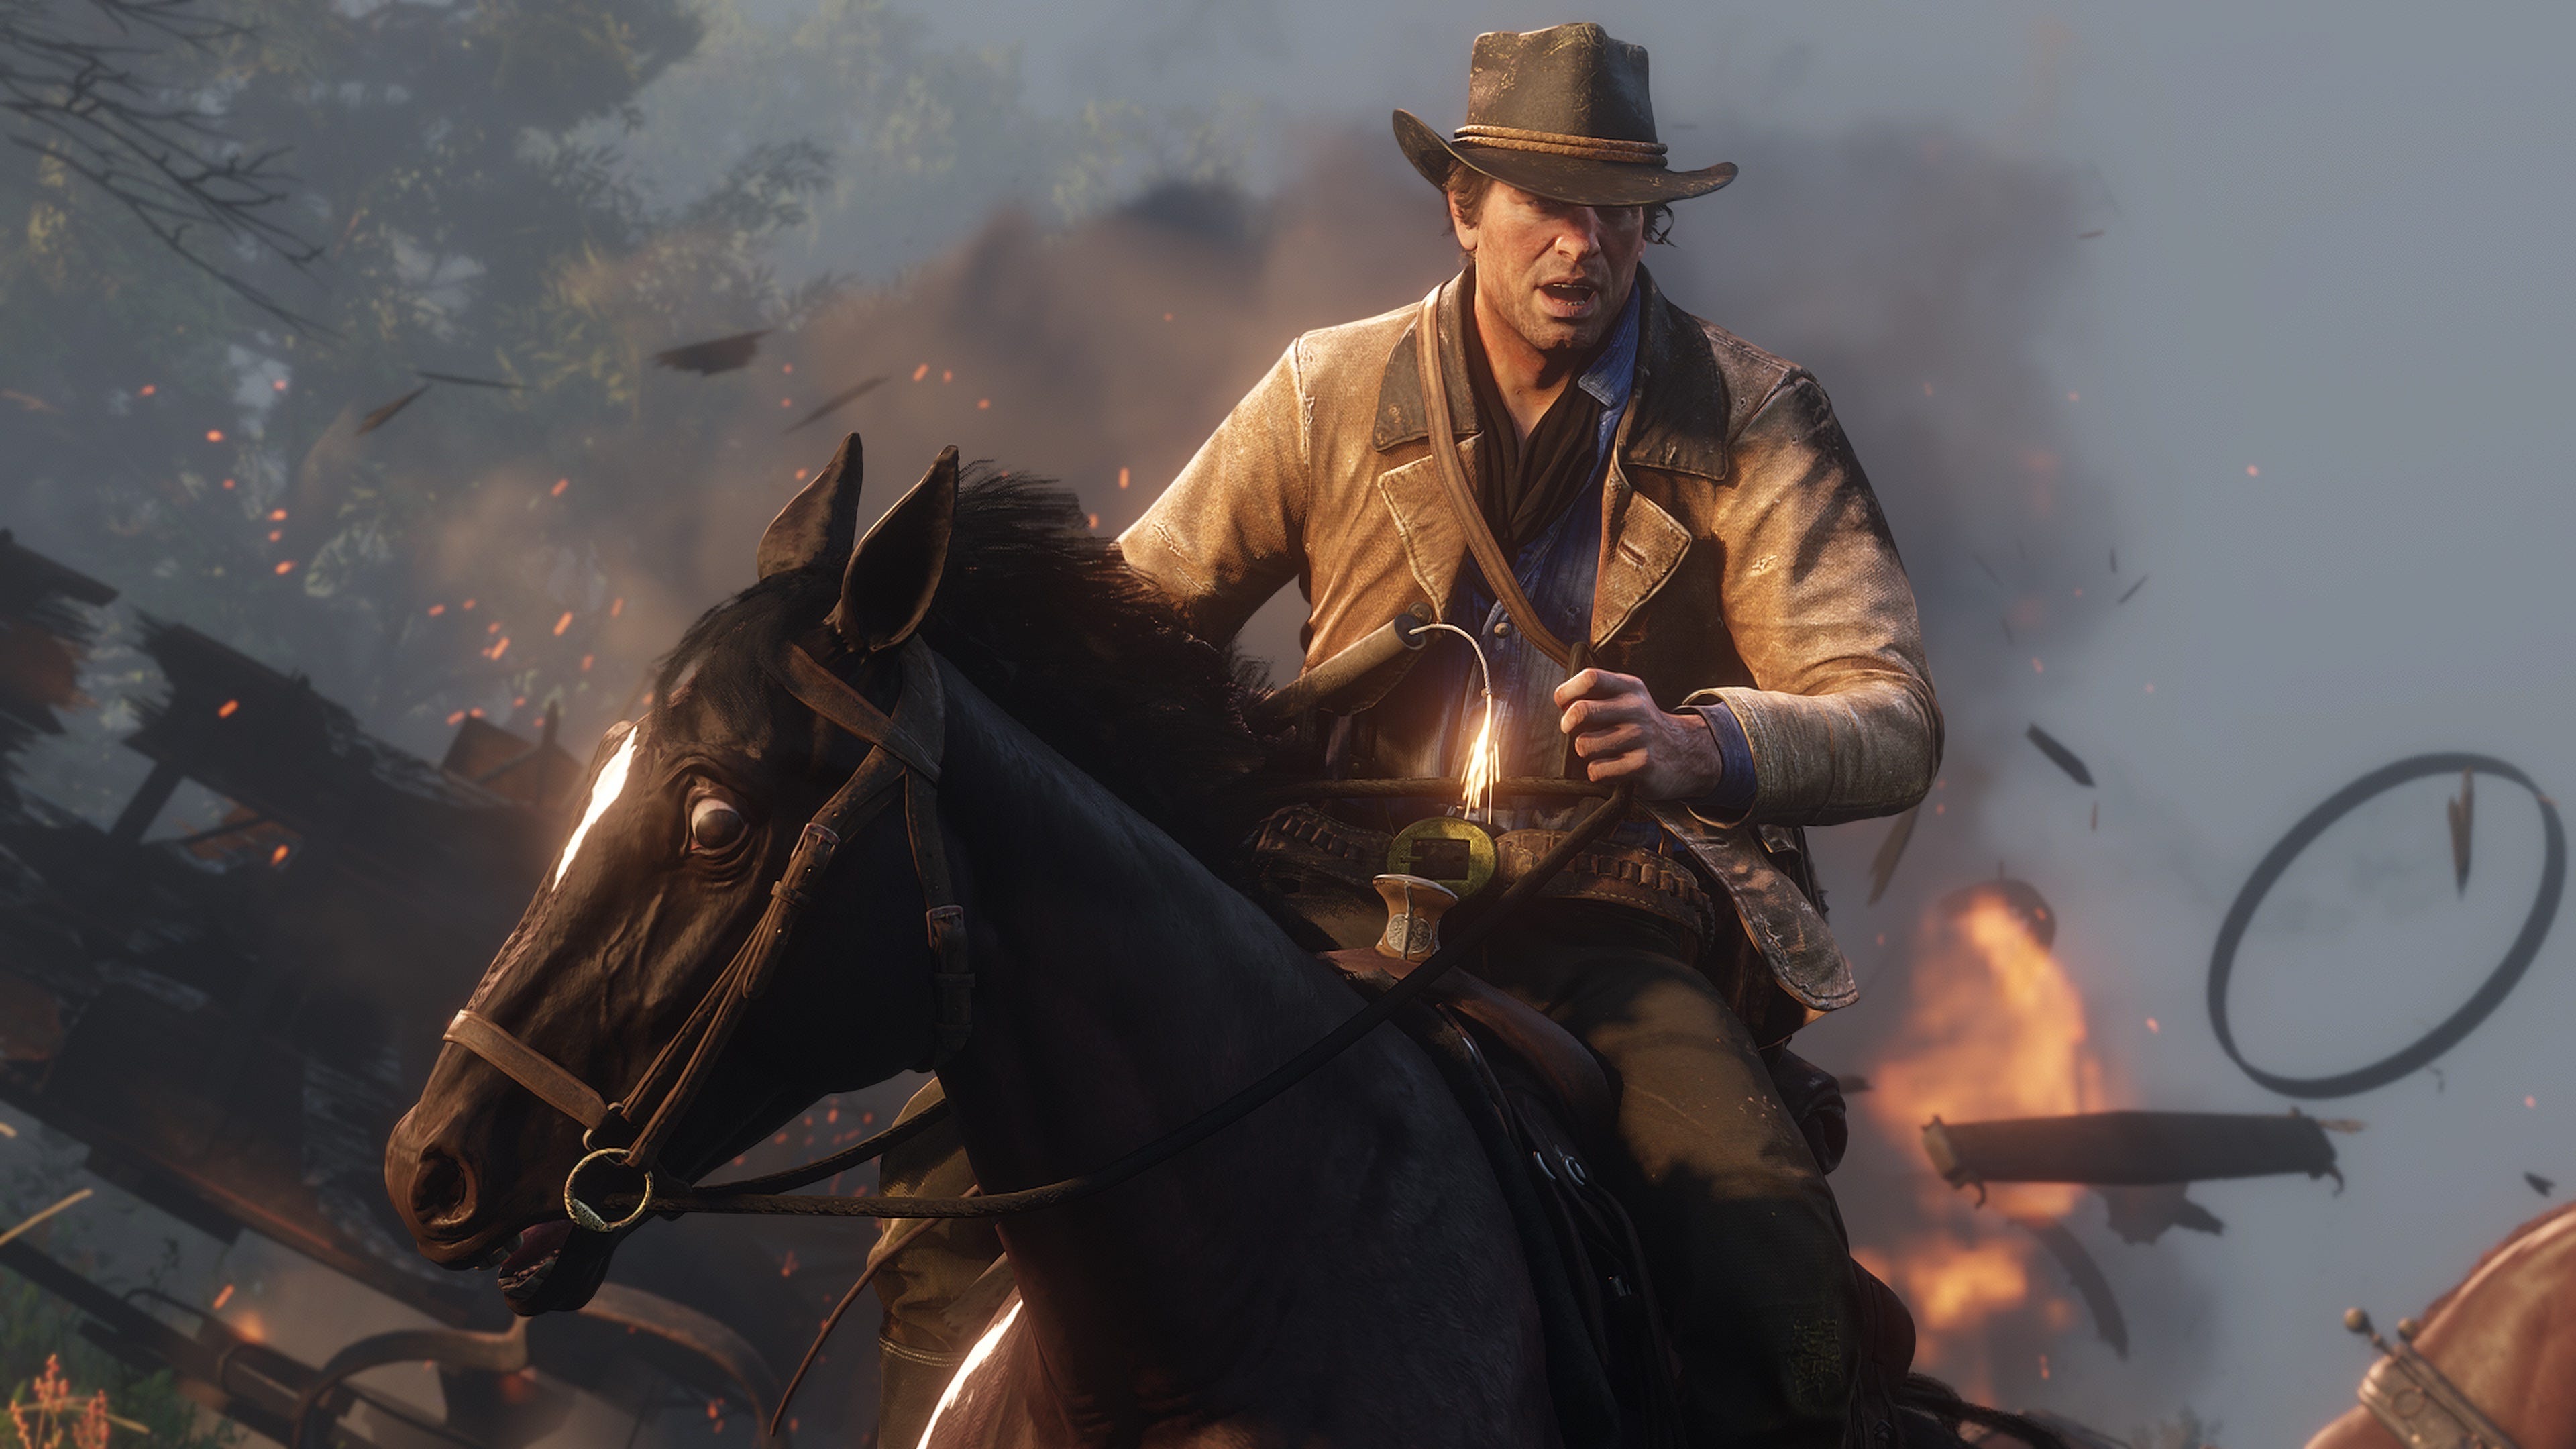 Red Dead Redemption 2 $725 million in debut for Rockstar Games